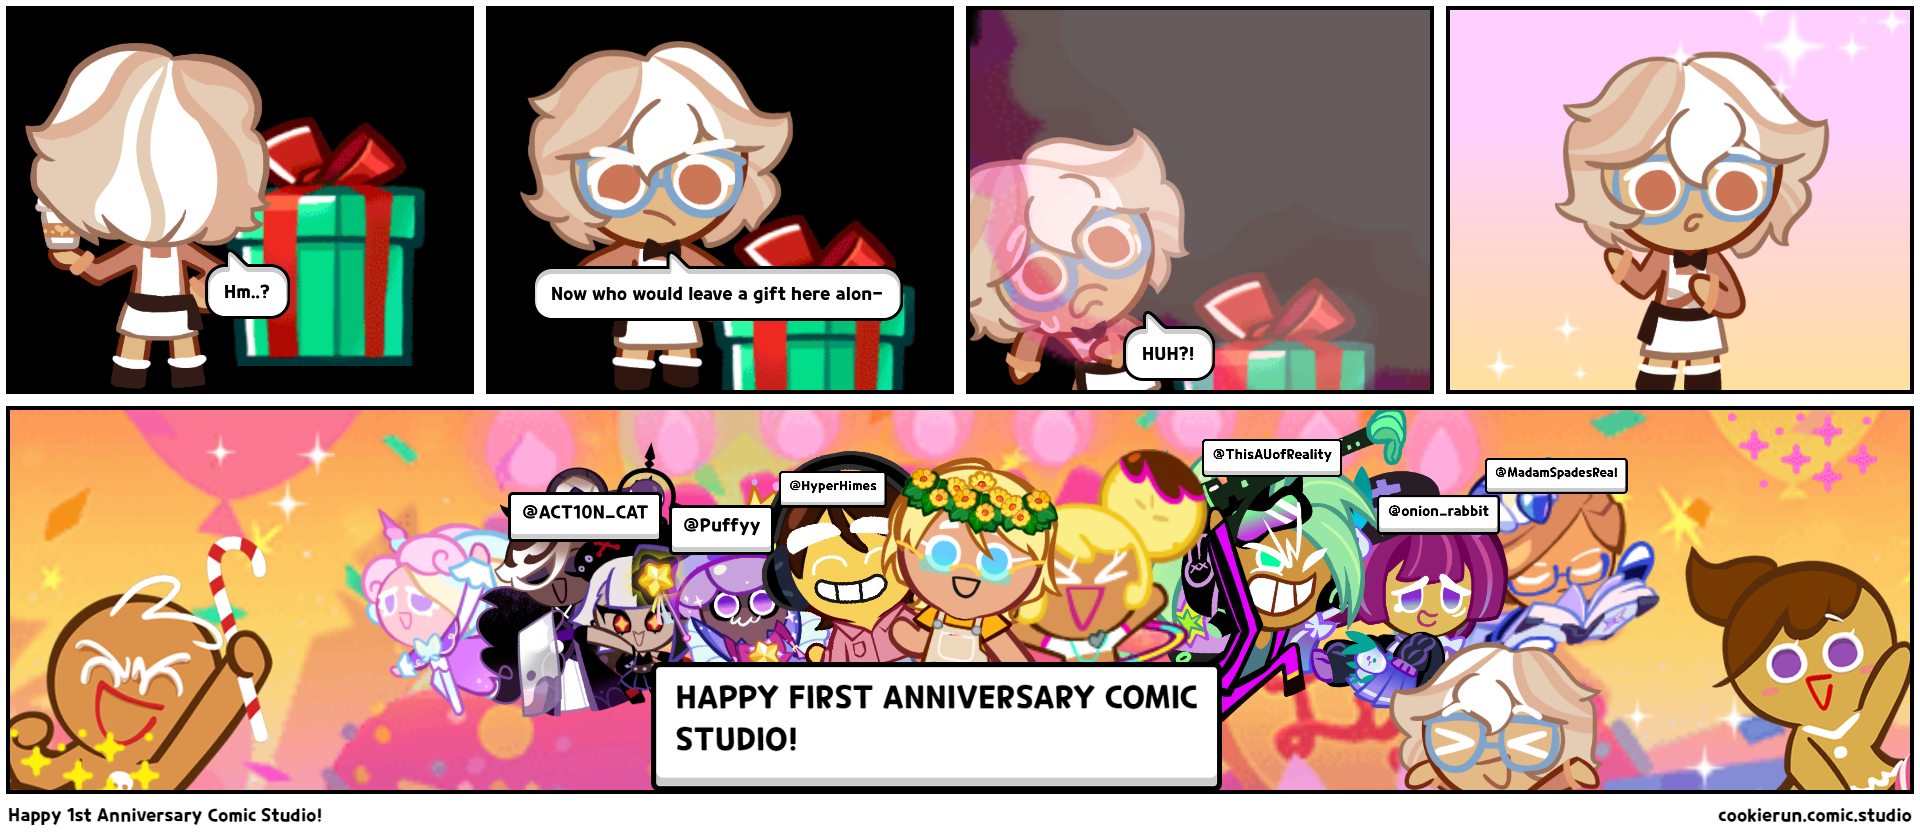 Happy 1st Anniversary Comic Studio!